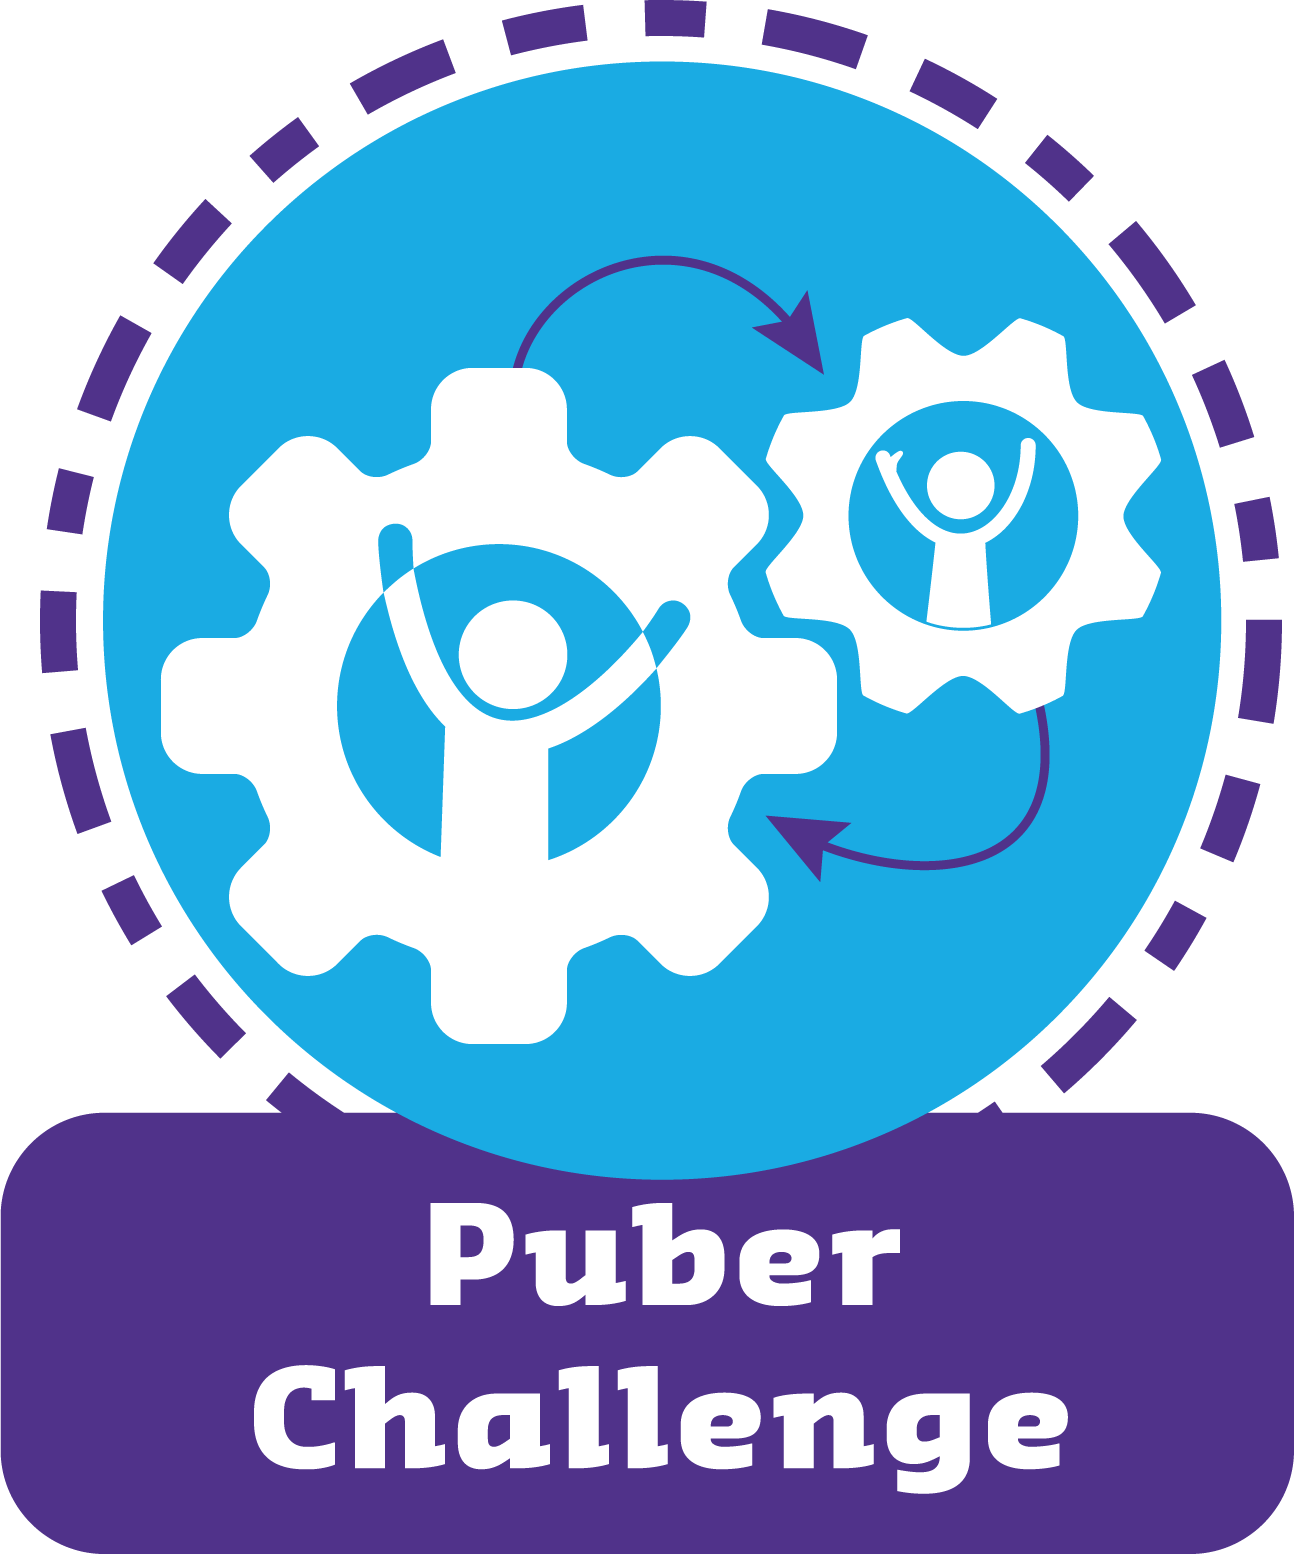 Puber challenge